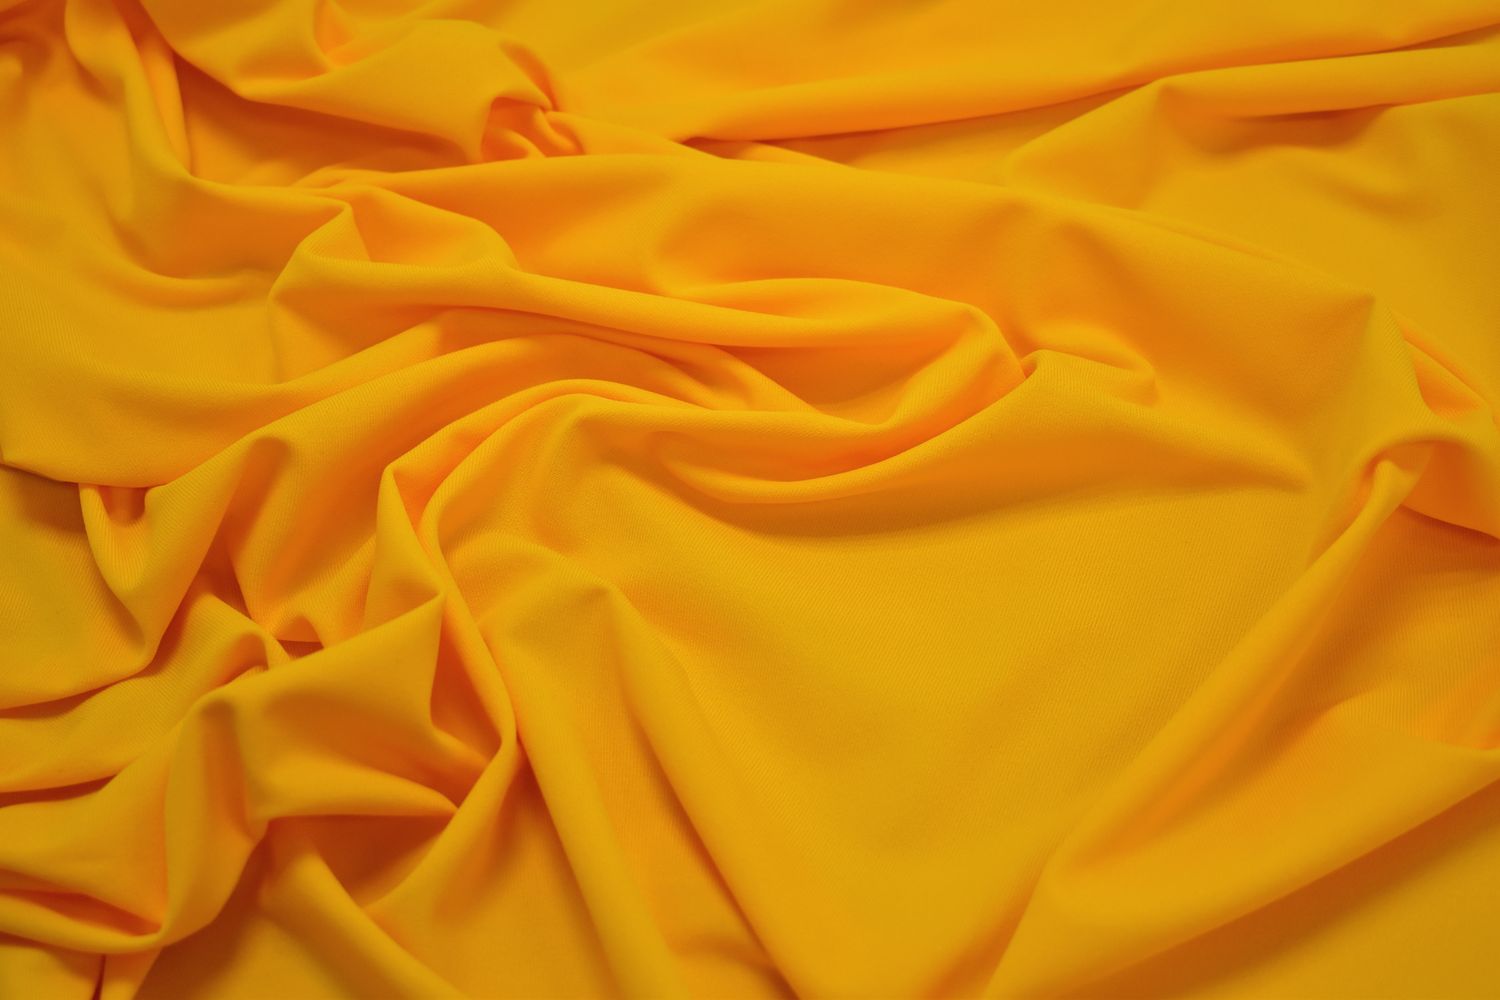 Бифлекс матовый желтого цвета W-125433